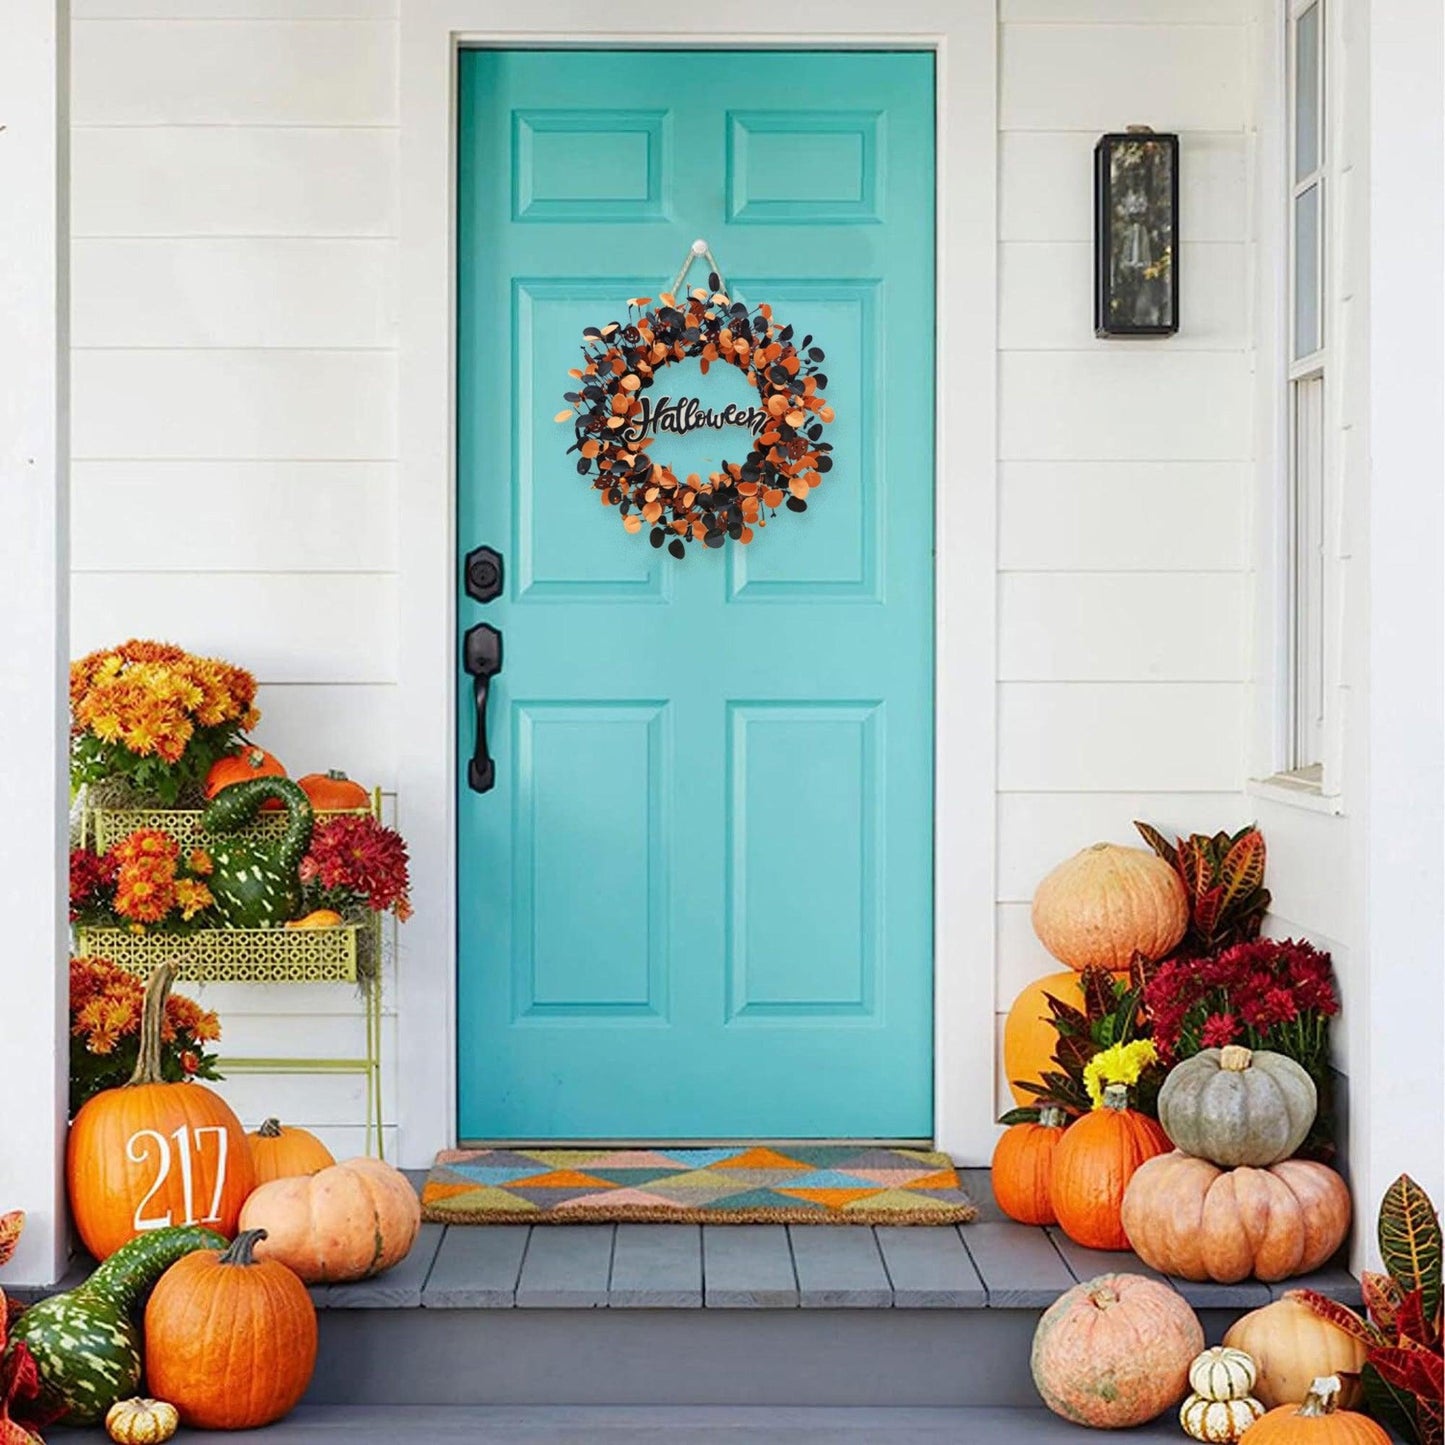 22 inch Halloween Wreaths for Front Door with Wood Pumpkins Thanksgiving Decorations